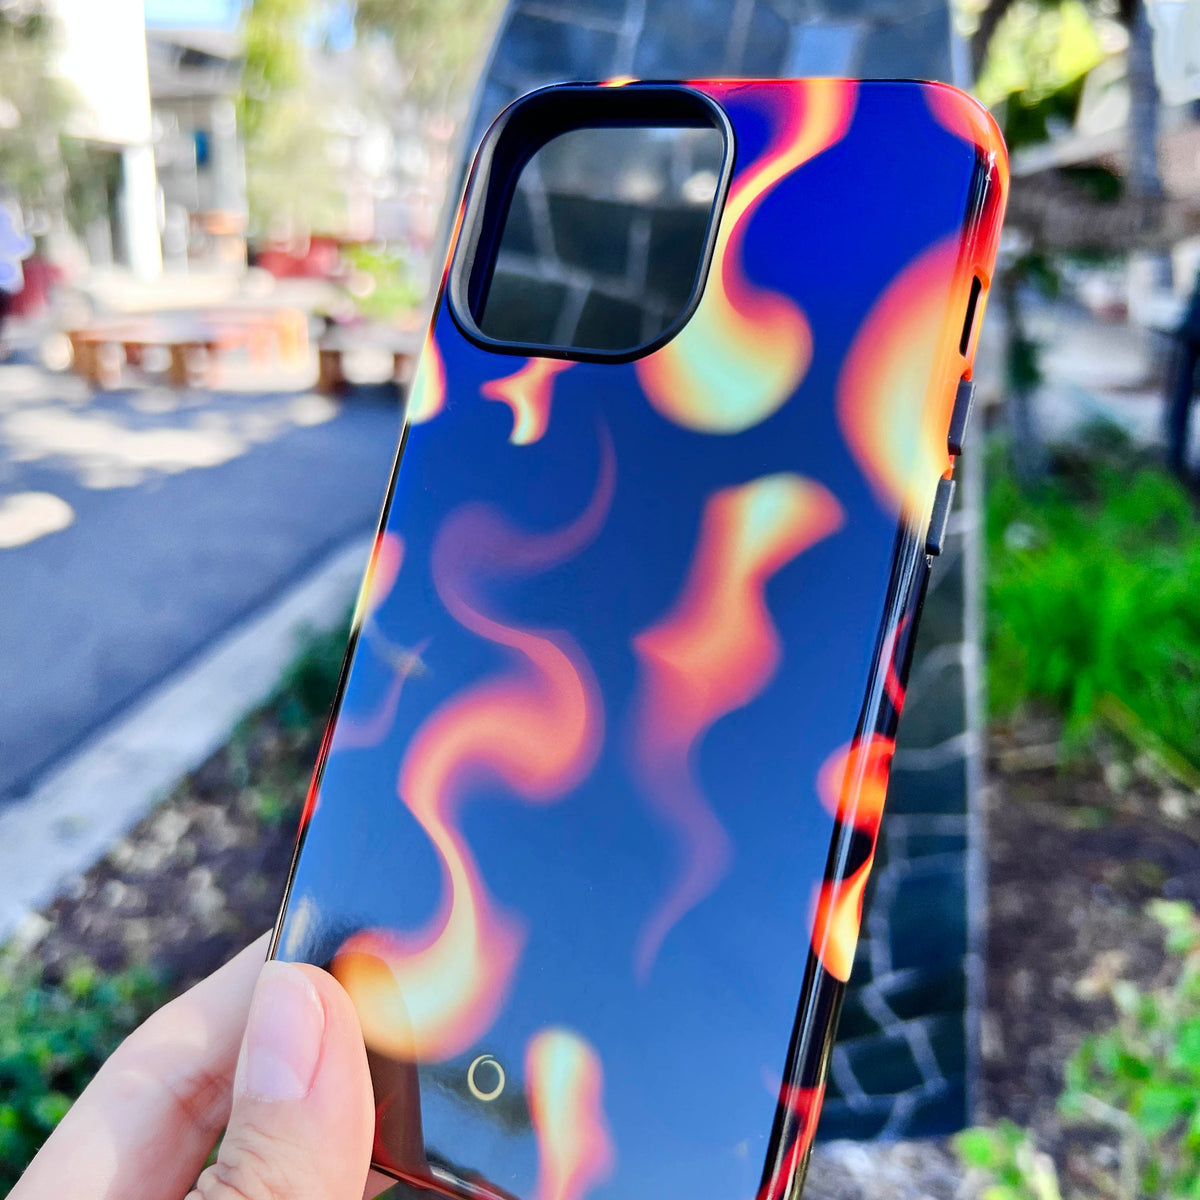 Groovy Orange Flame iPhone Case - iPhone 11 Pro